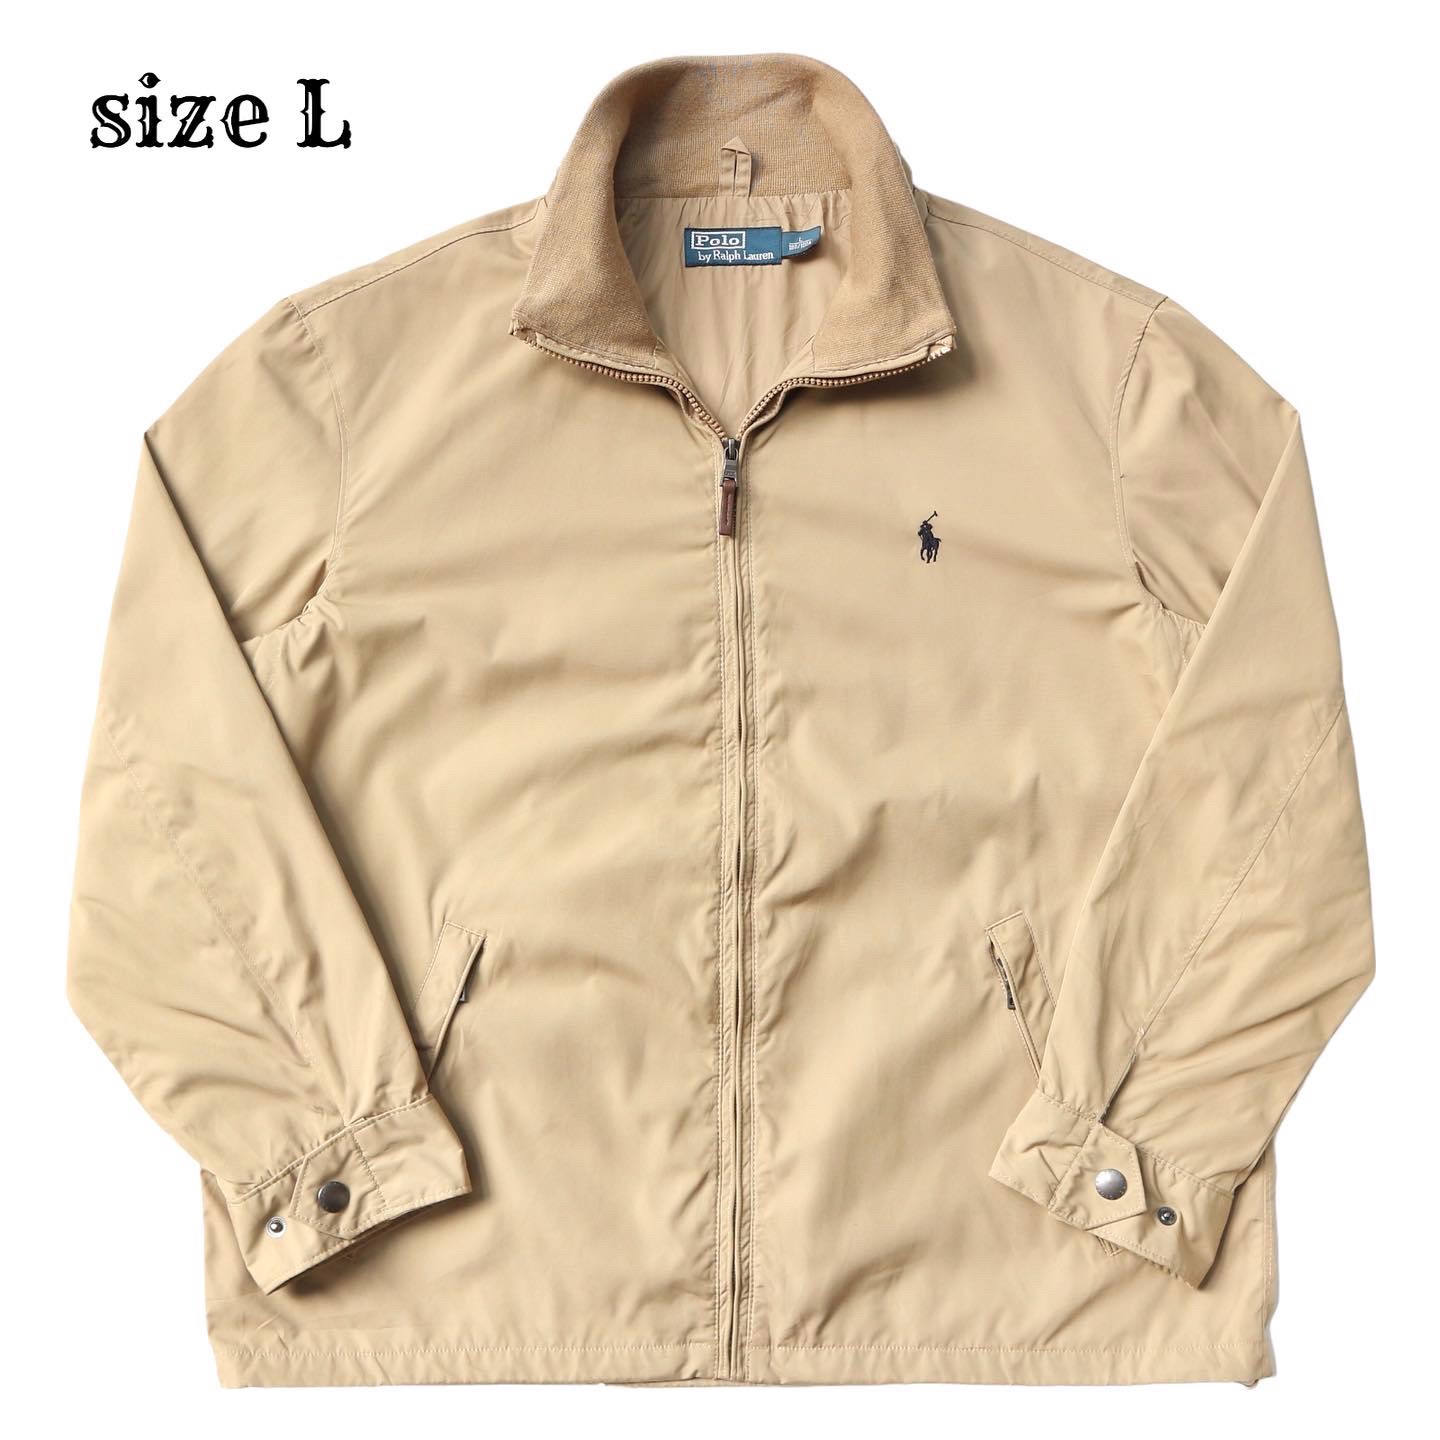 Aprender acerca 53+ imagen polo ralph lauren jackets on sale